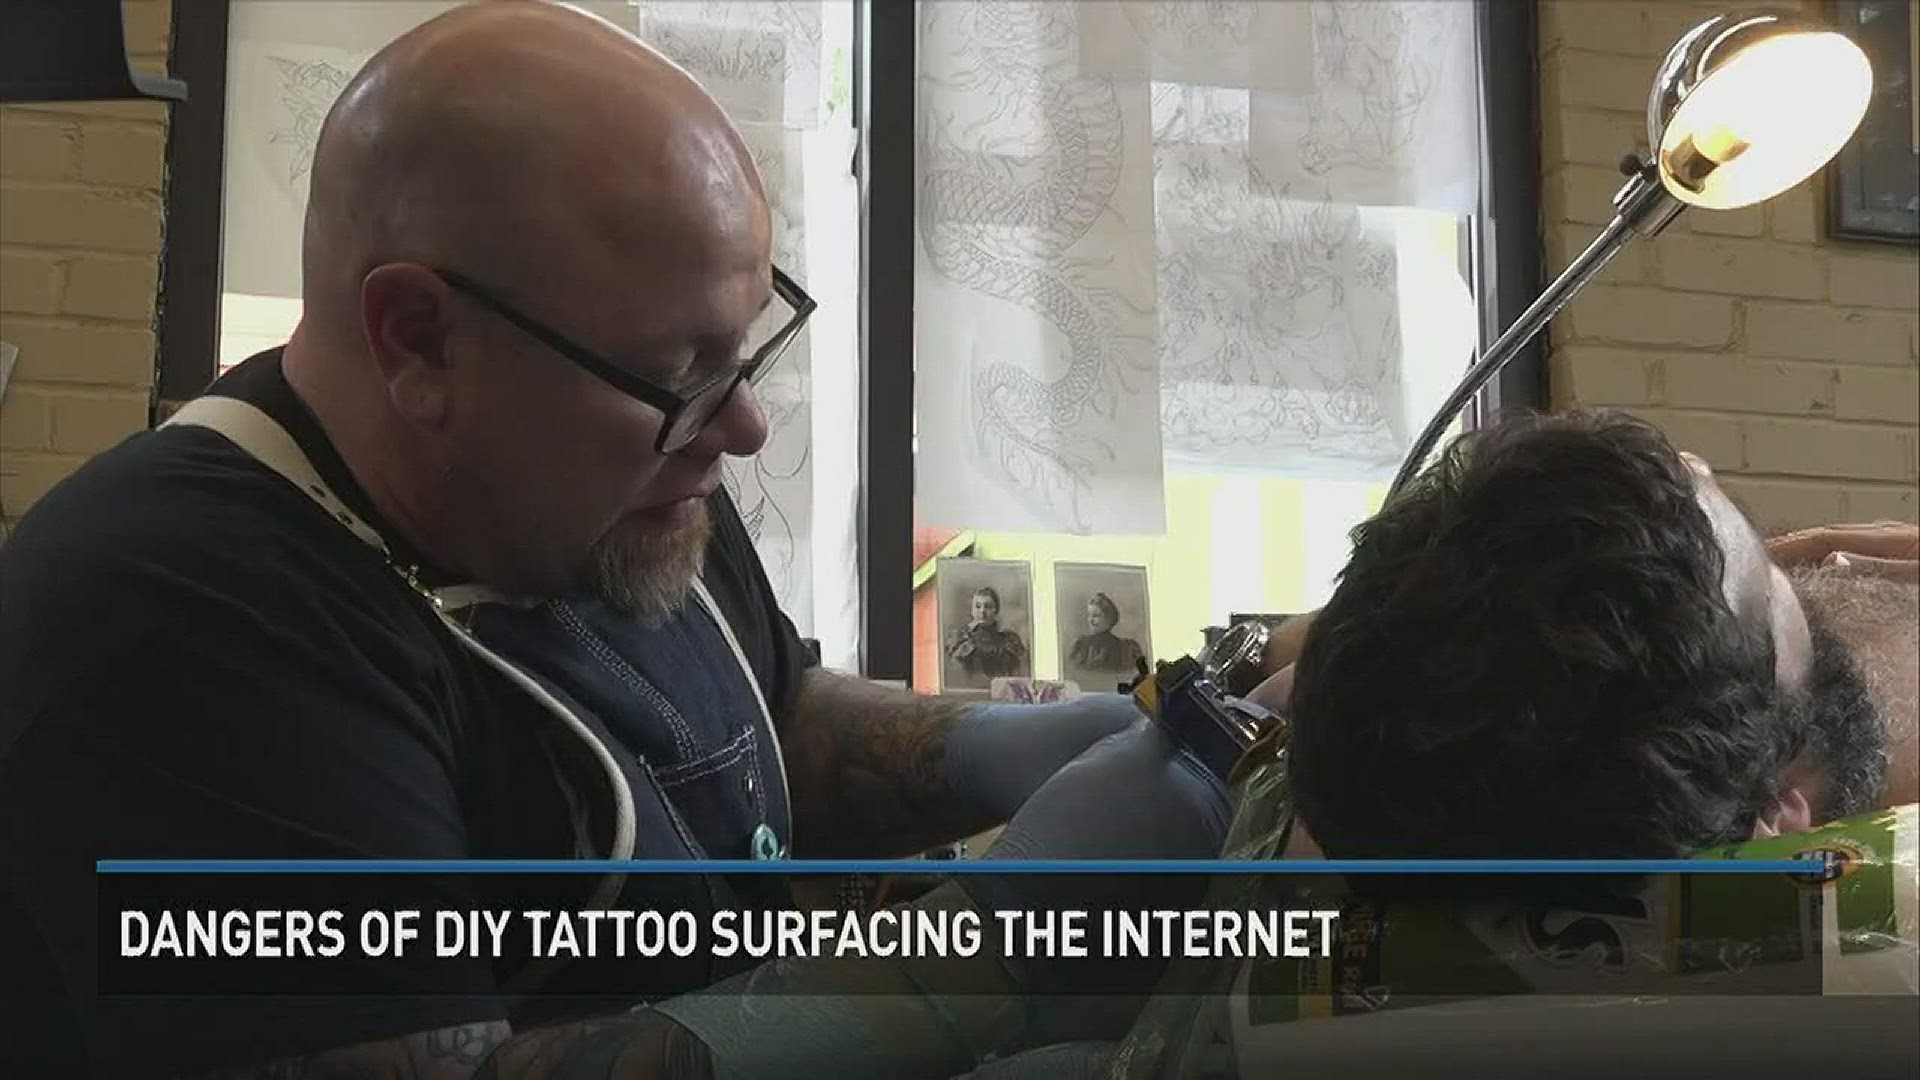 Local tattoo artist discusses the risks of DIY tatoos.